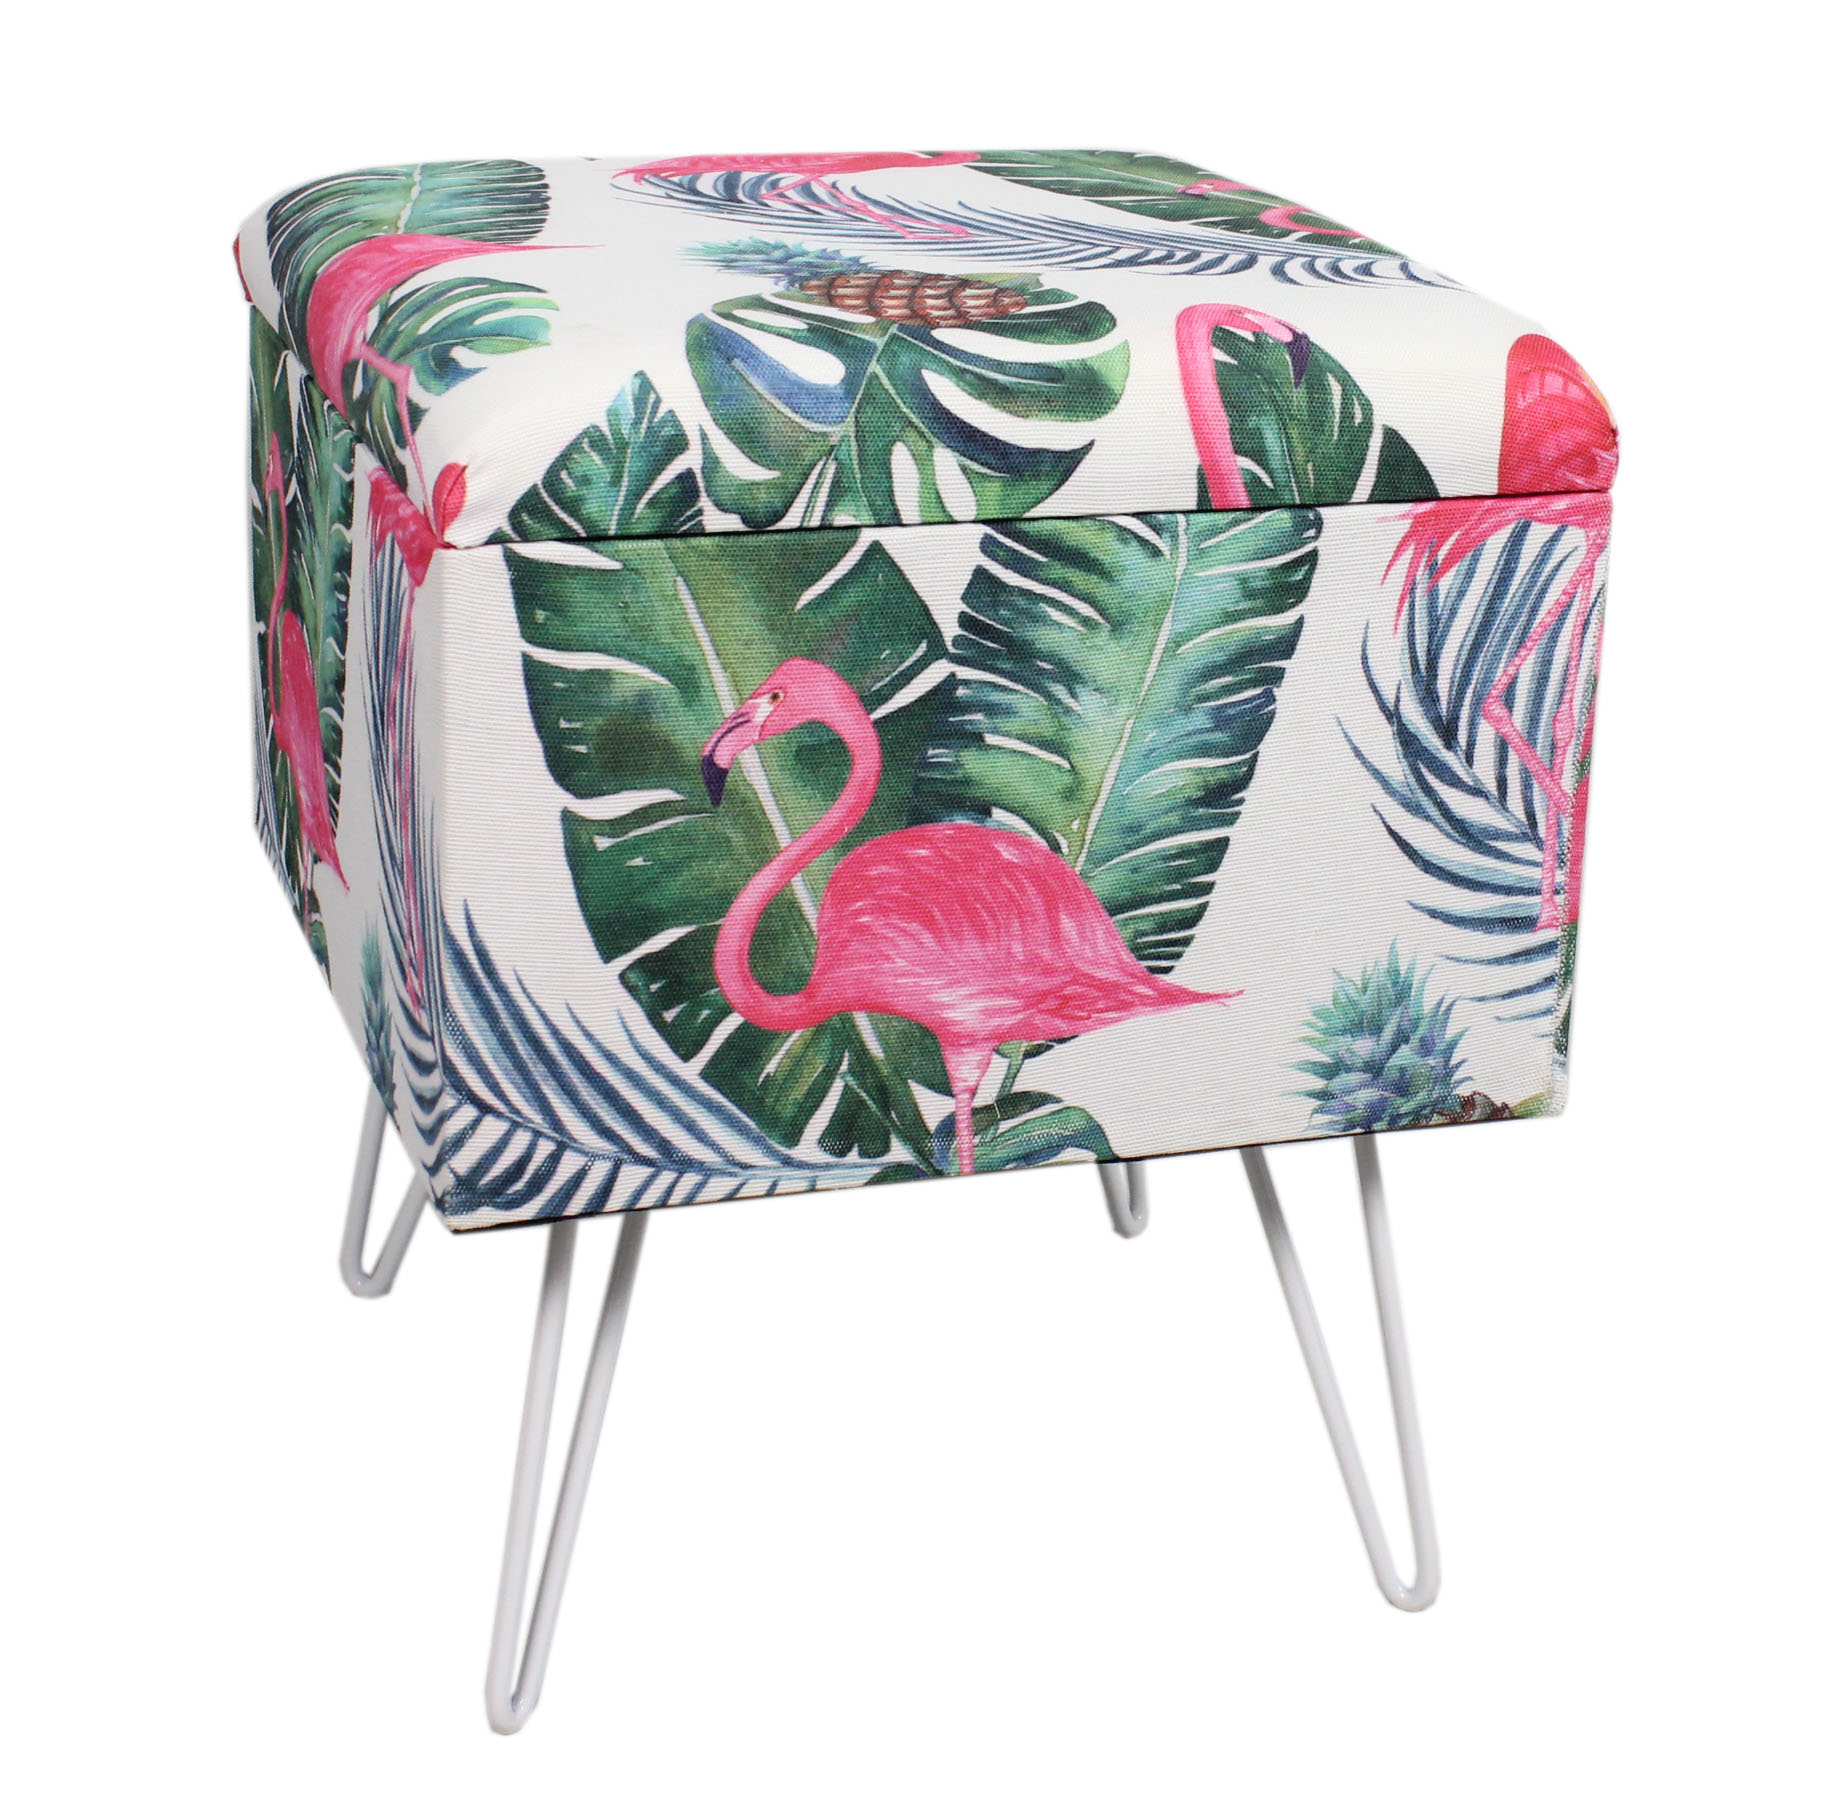 Wood & Fabric Footstool with leaf design-5596